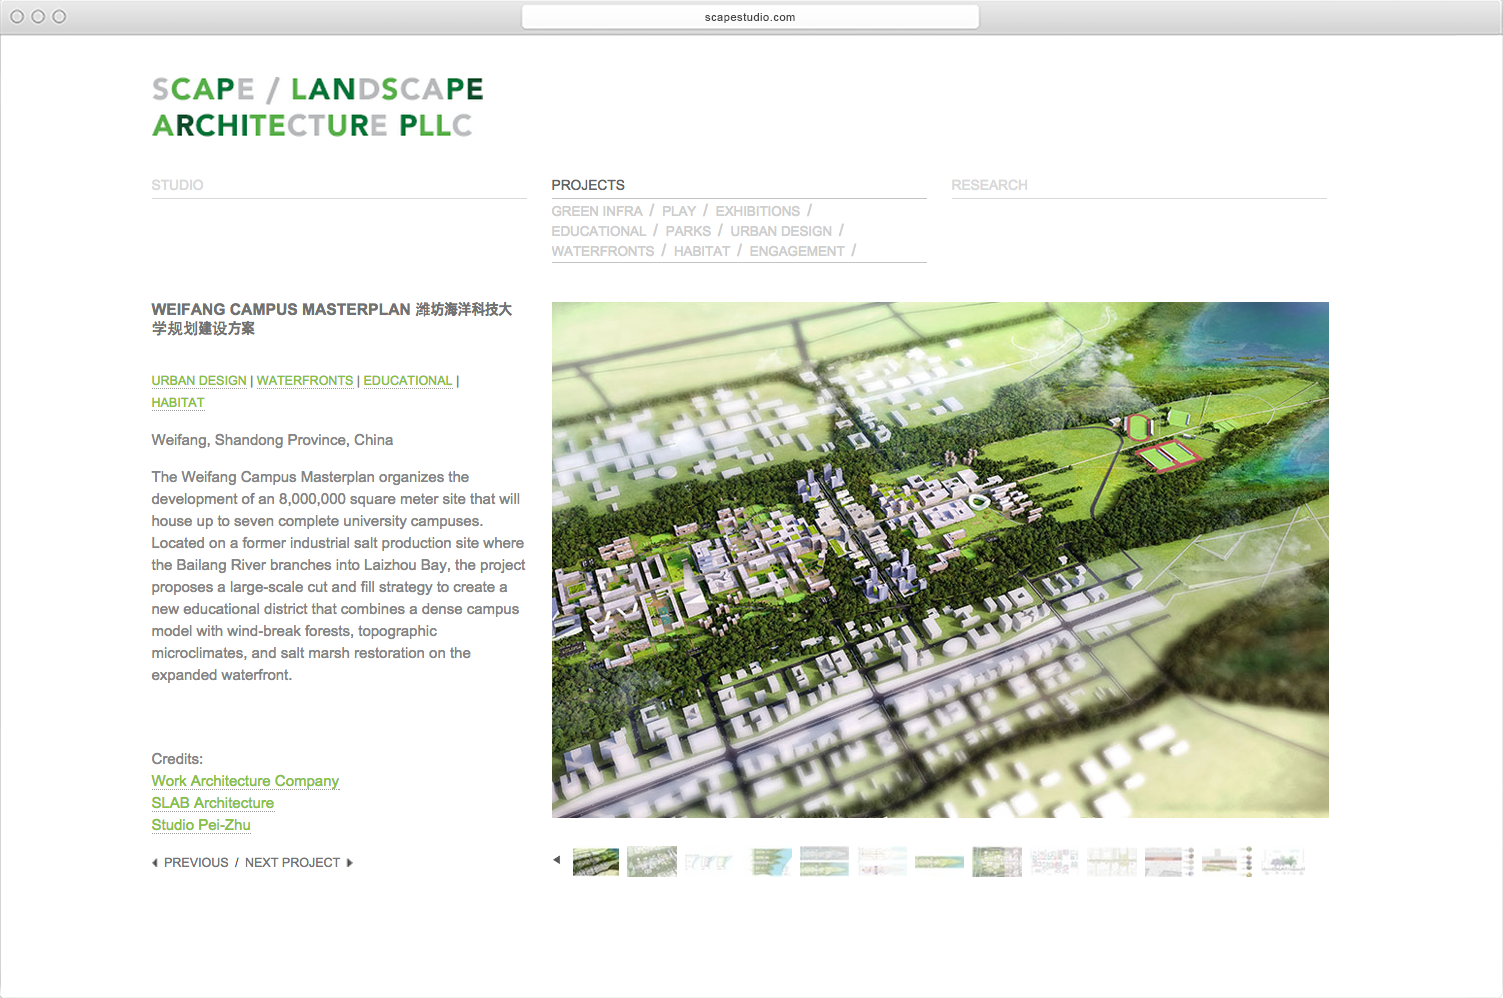 SCAPE / Landscape Architecture, PLLC  - MTWTF